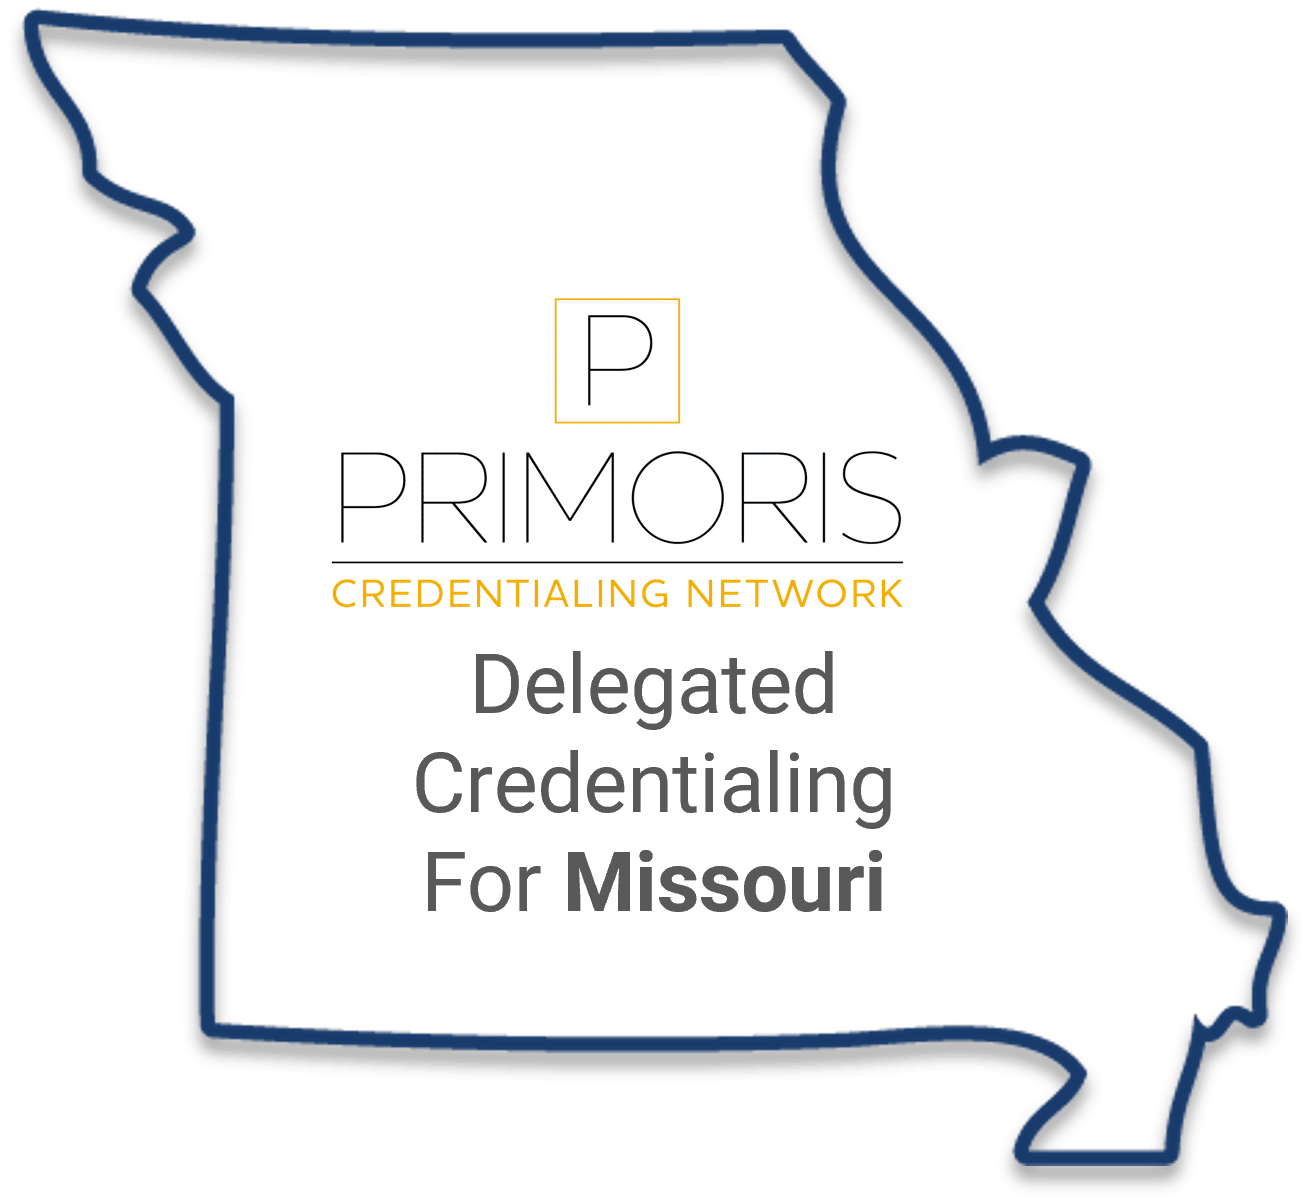 Delegated Credentialing In Missouri With Primoris